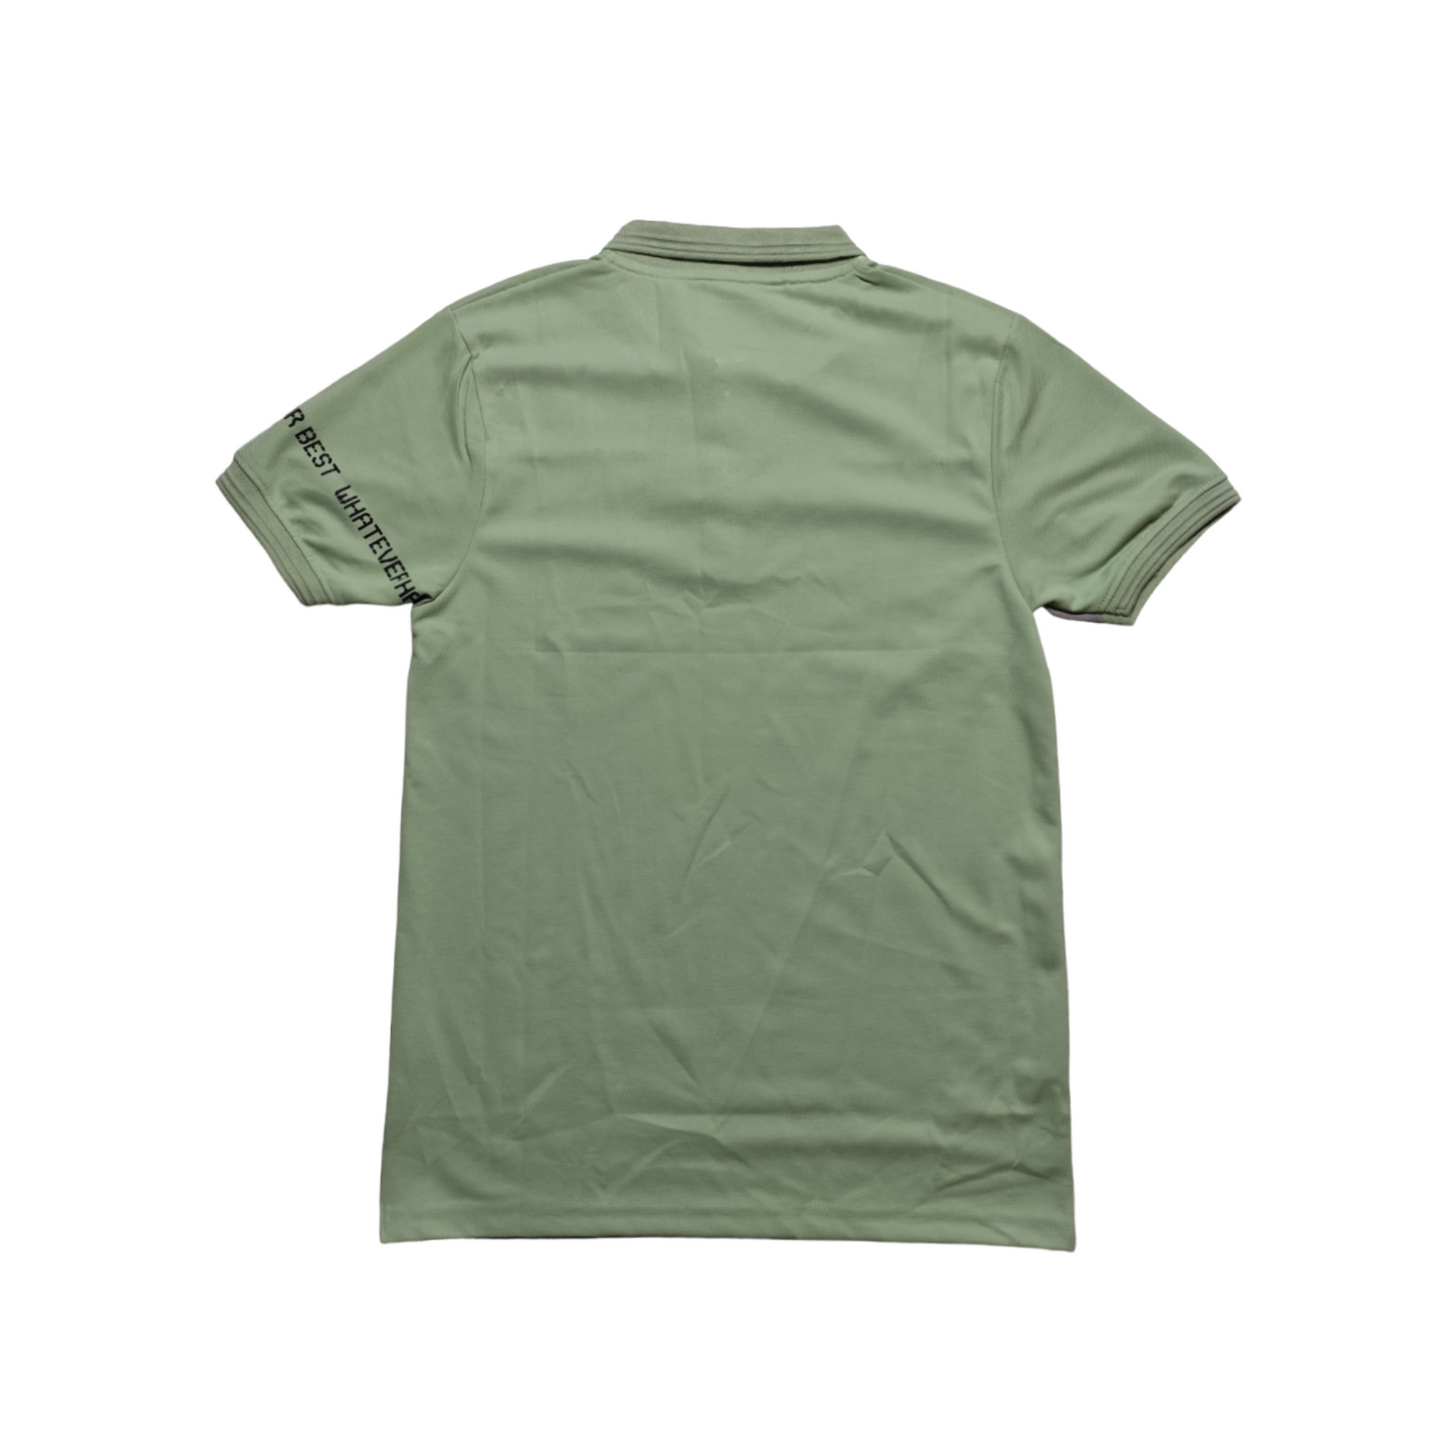 Ferraro Collar T-shirt | Gray & Green